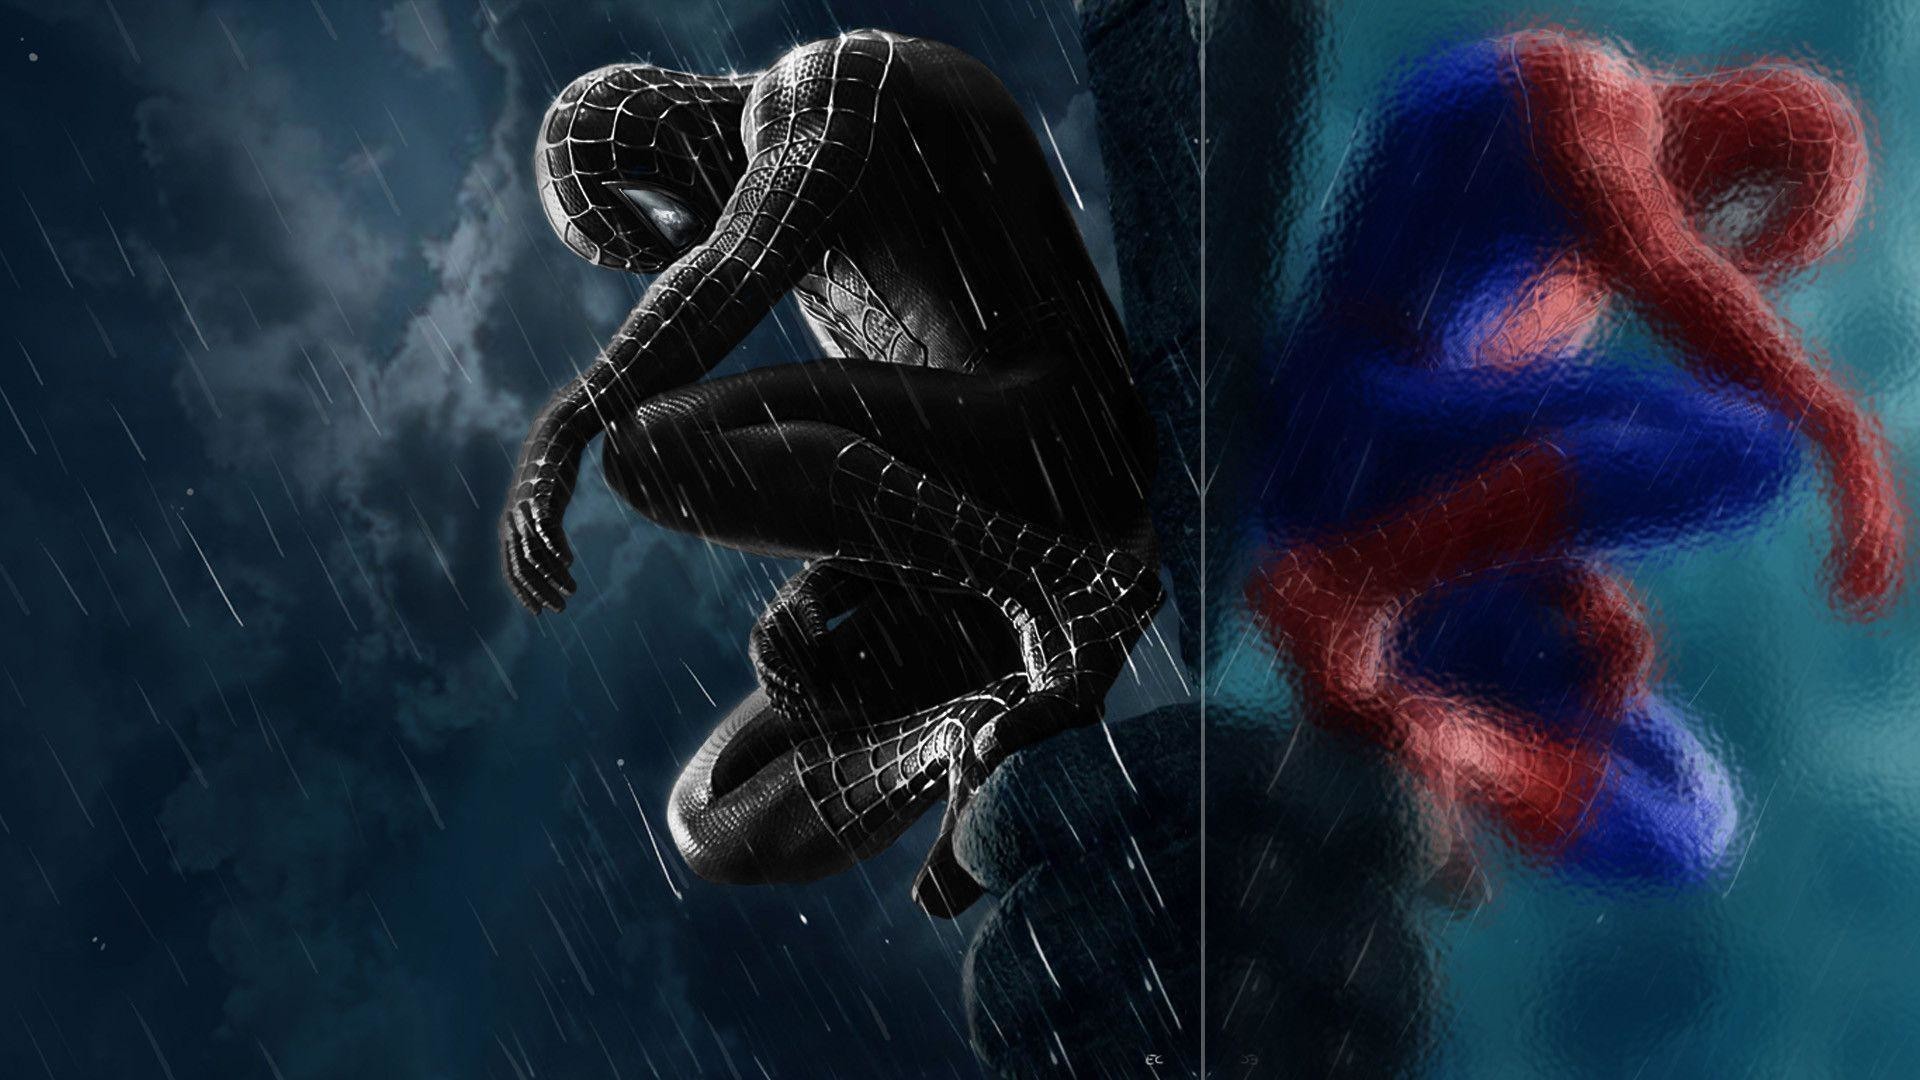 Spiderman 3 Wallpapper Wallpapers